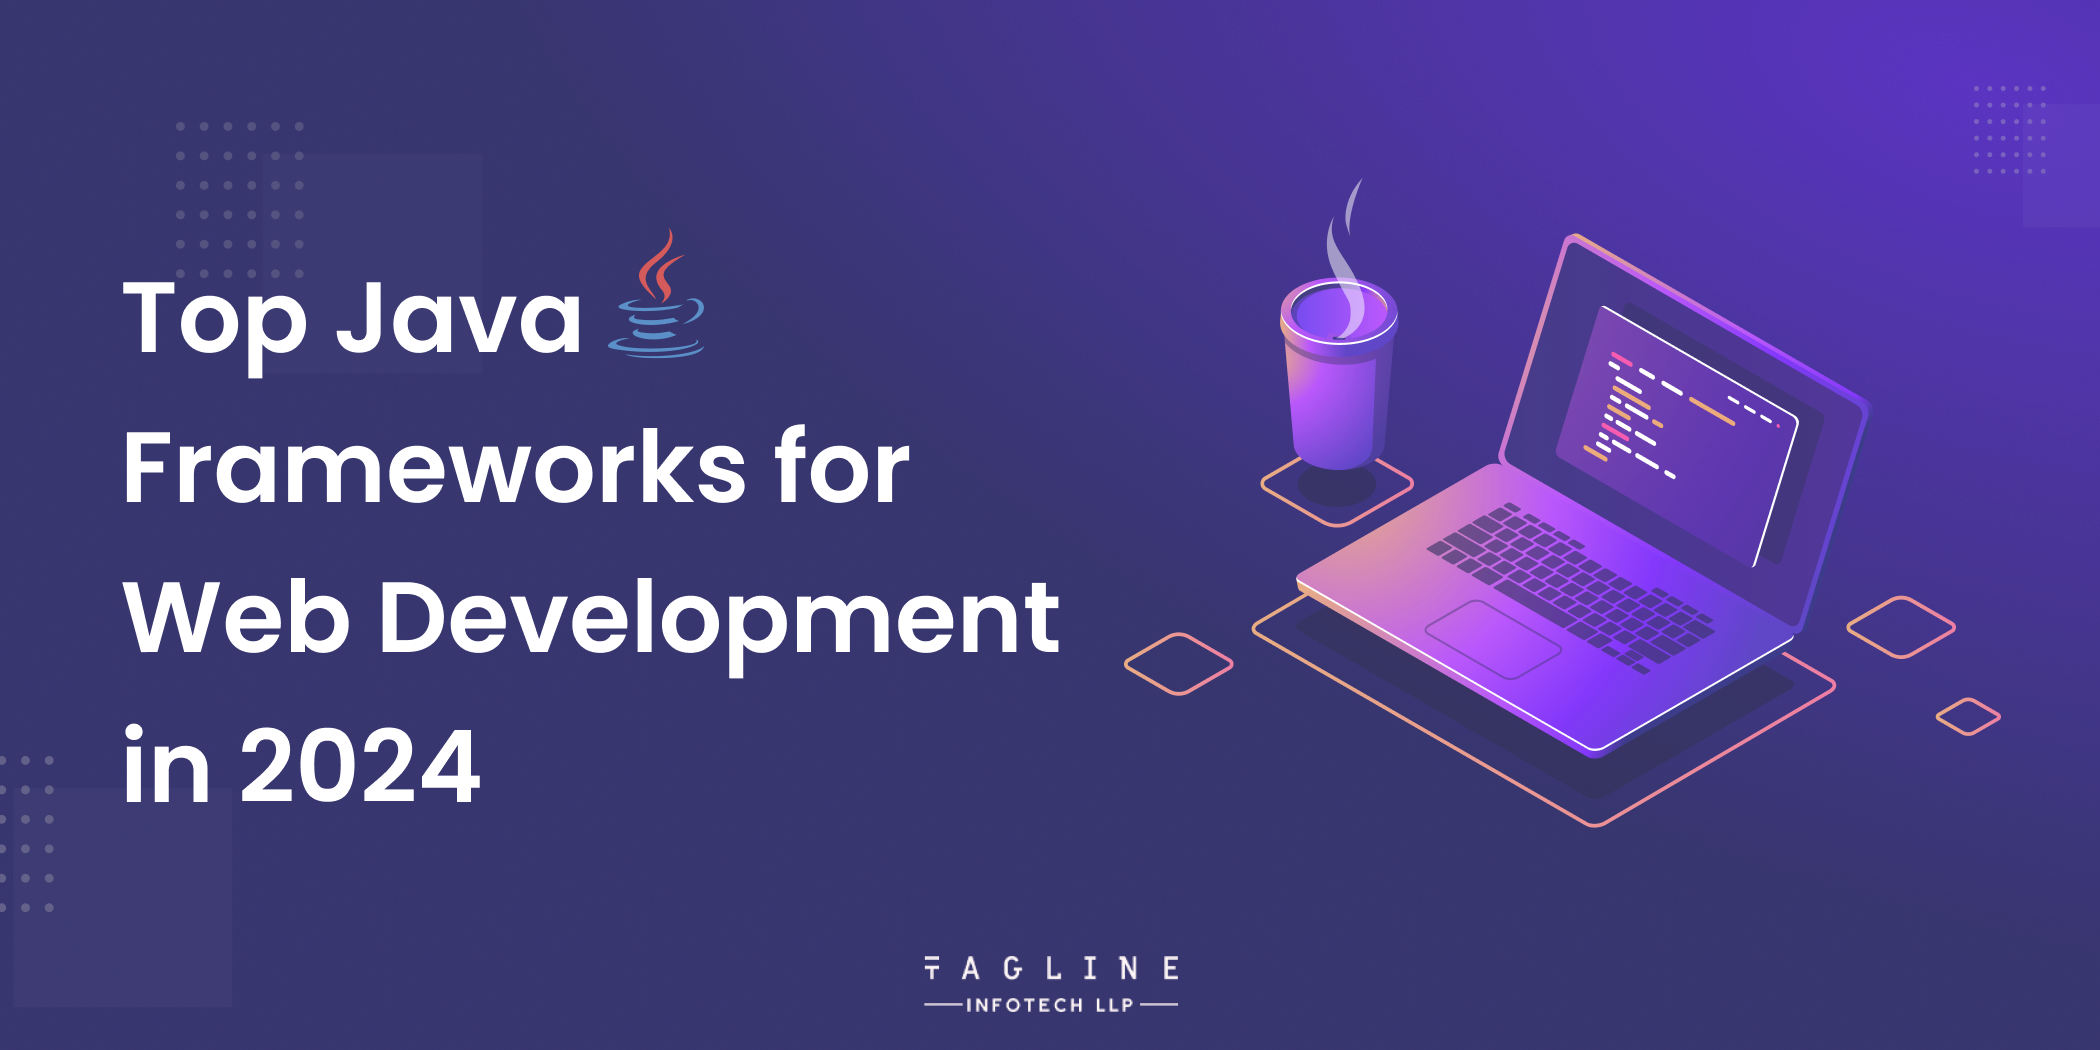 Top Java Frameworks for Web Development